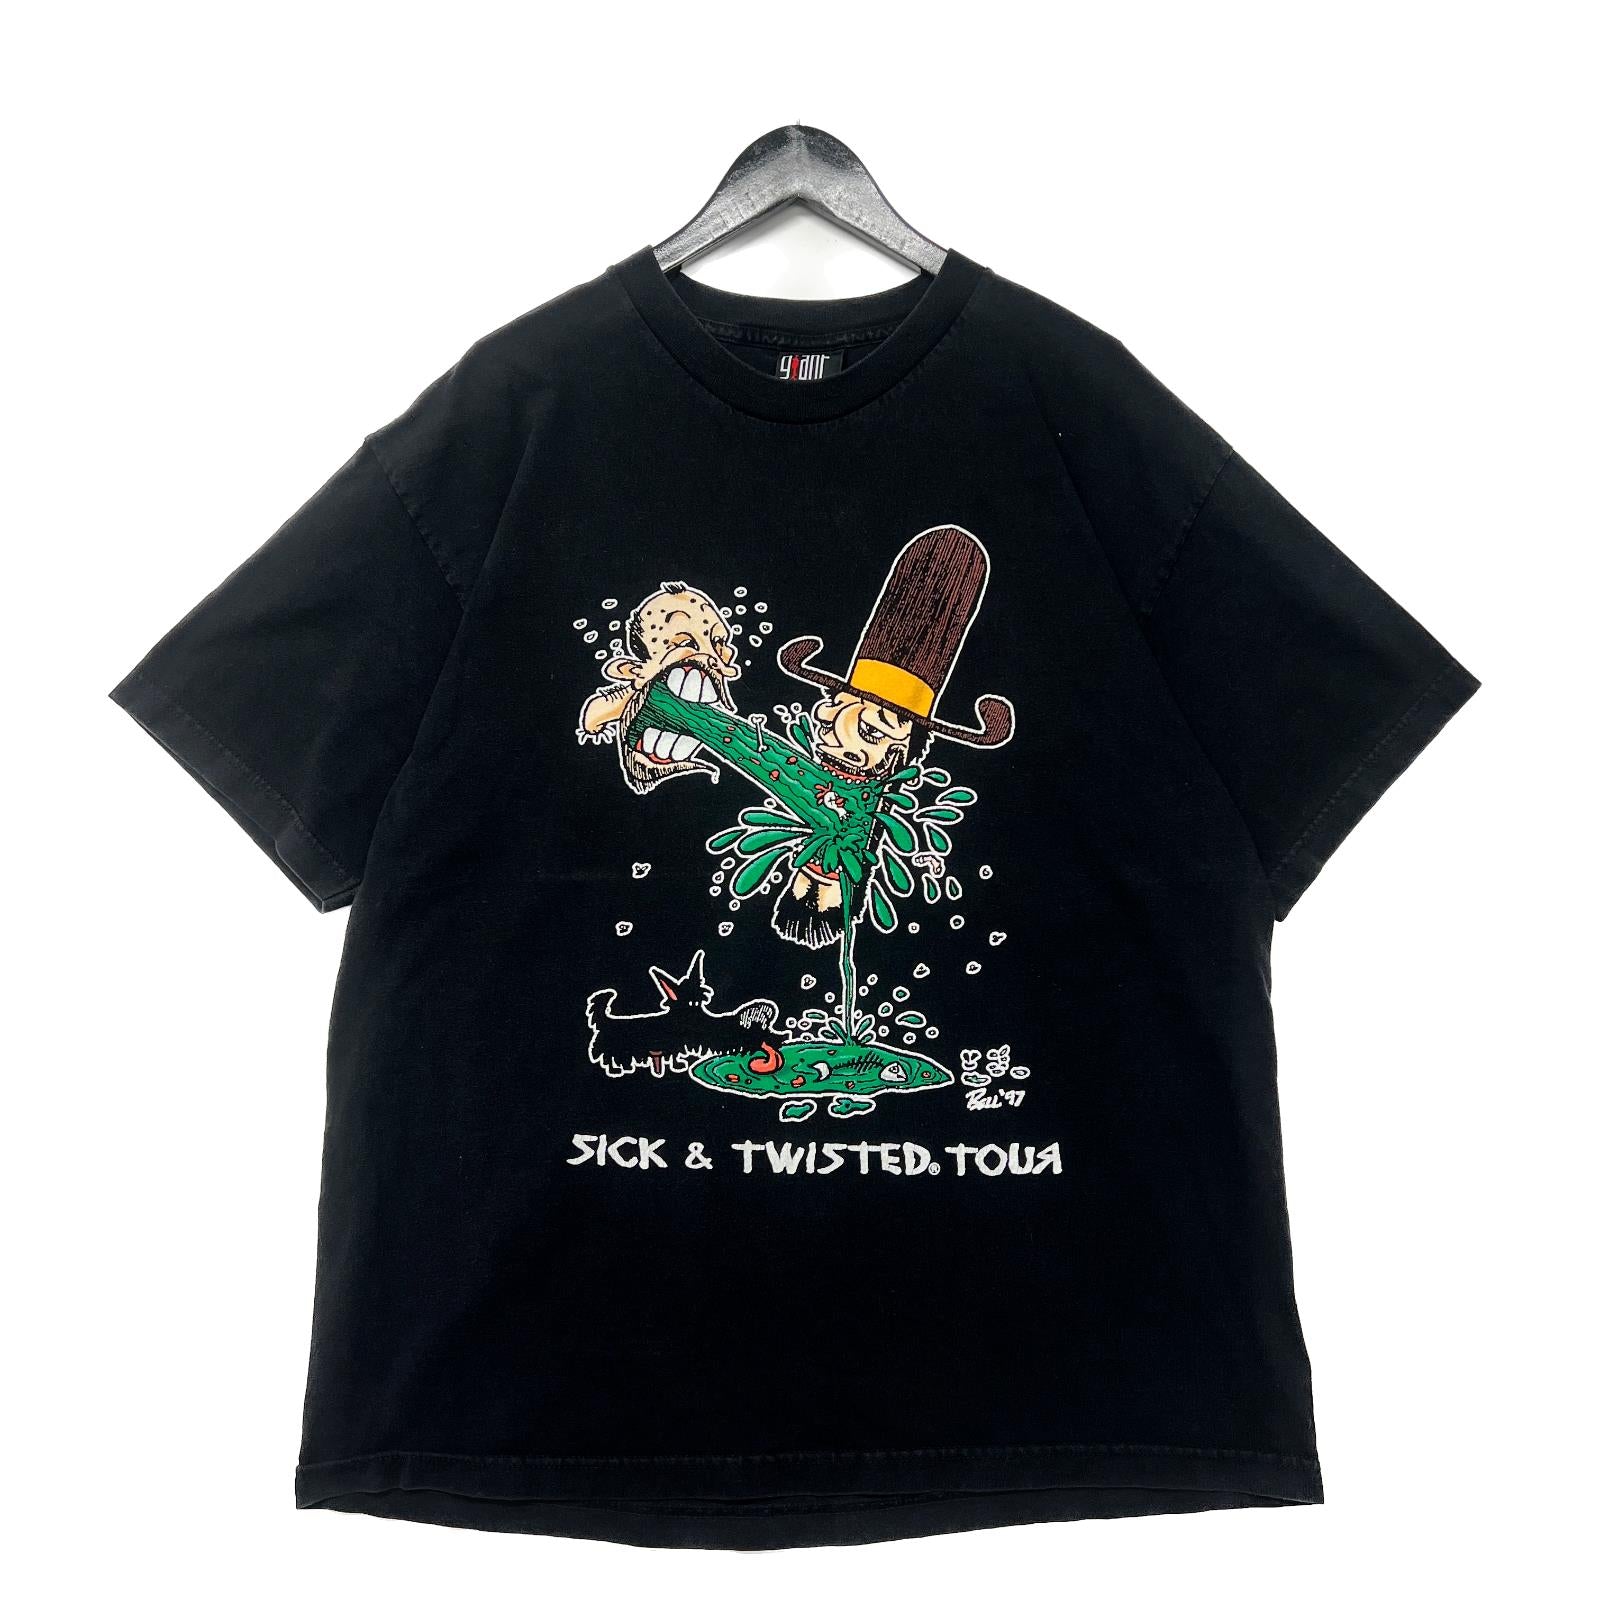 Korn Sick & Twisted Tour T-shirt Size XL